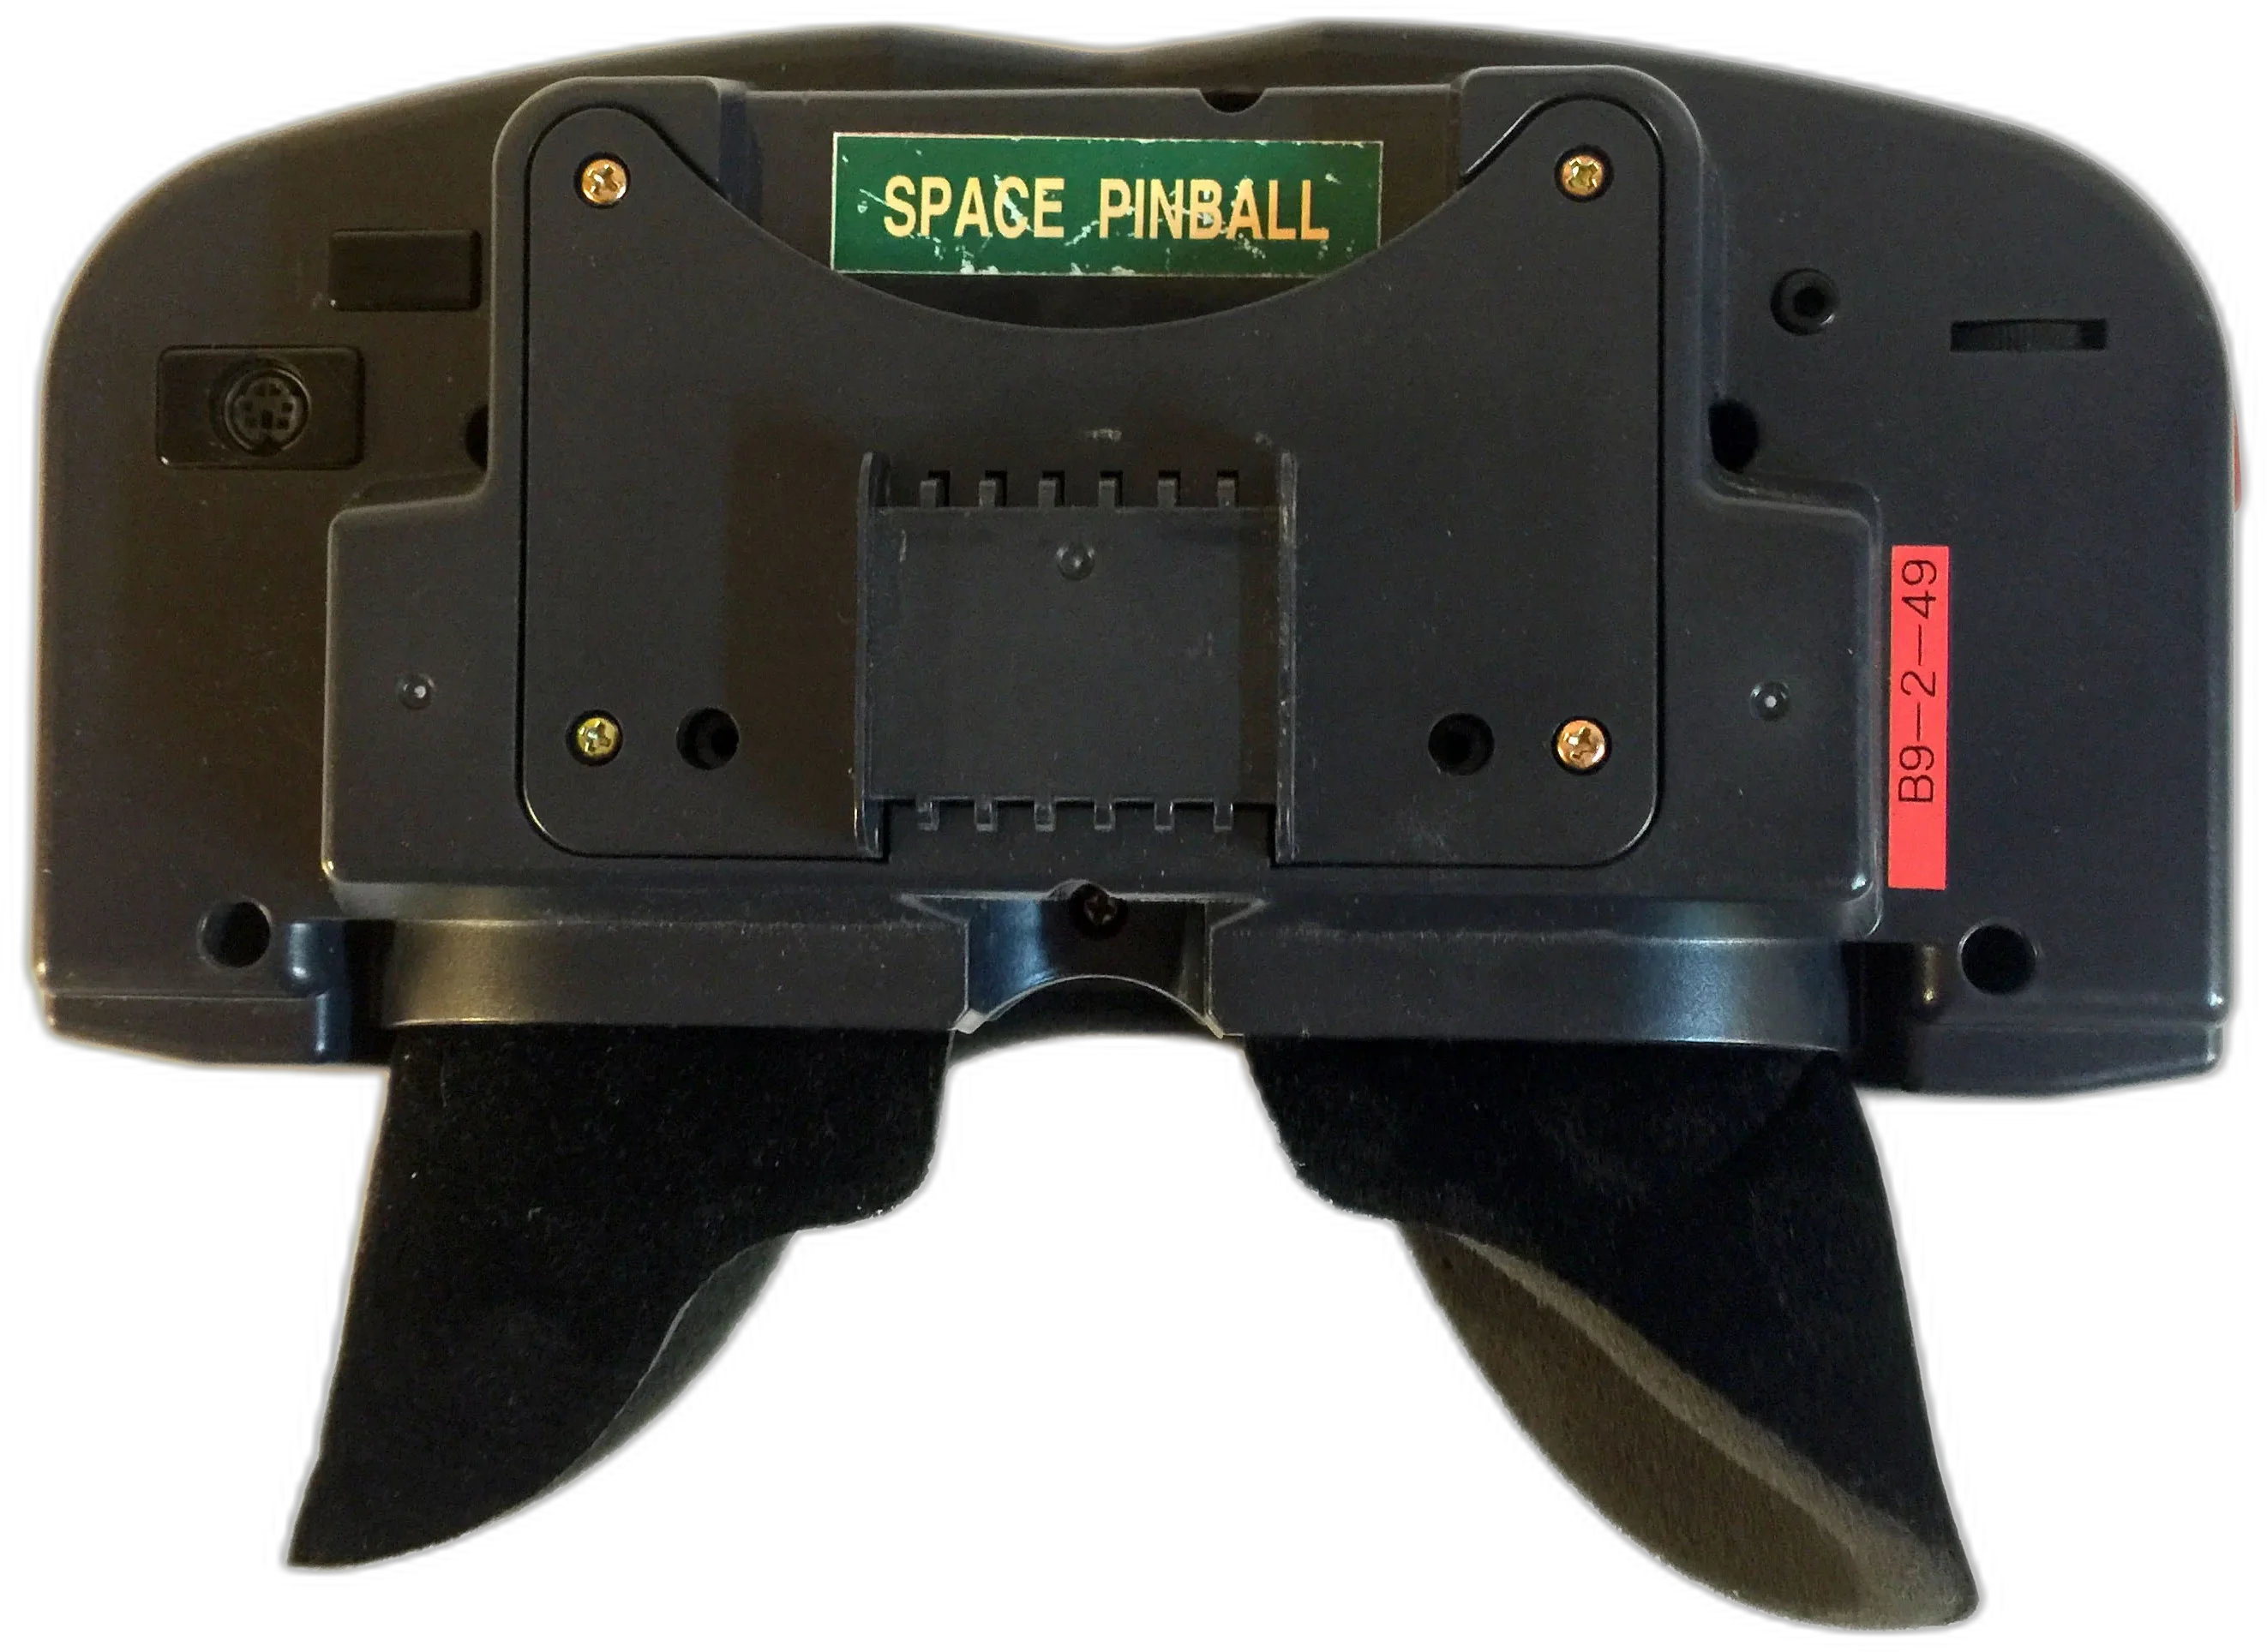  Nintendo Virtual Boy Prototype Console